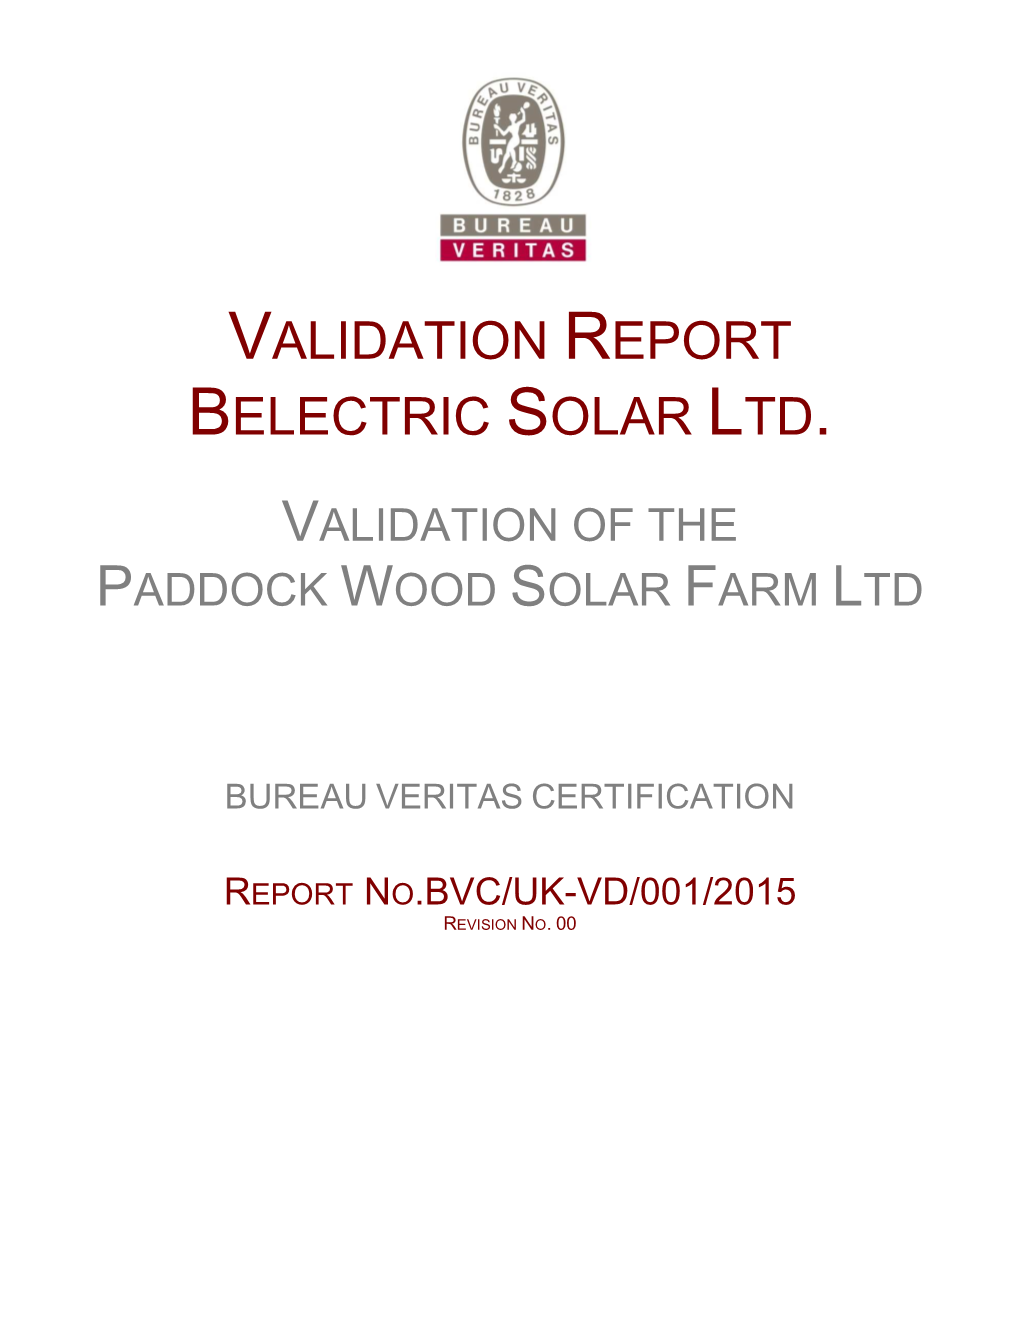 Paddock Wood Solar Farm Ltd